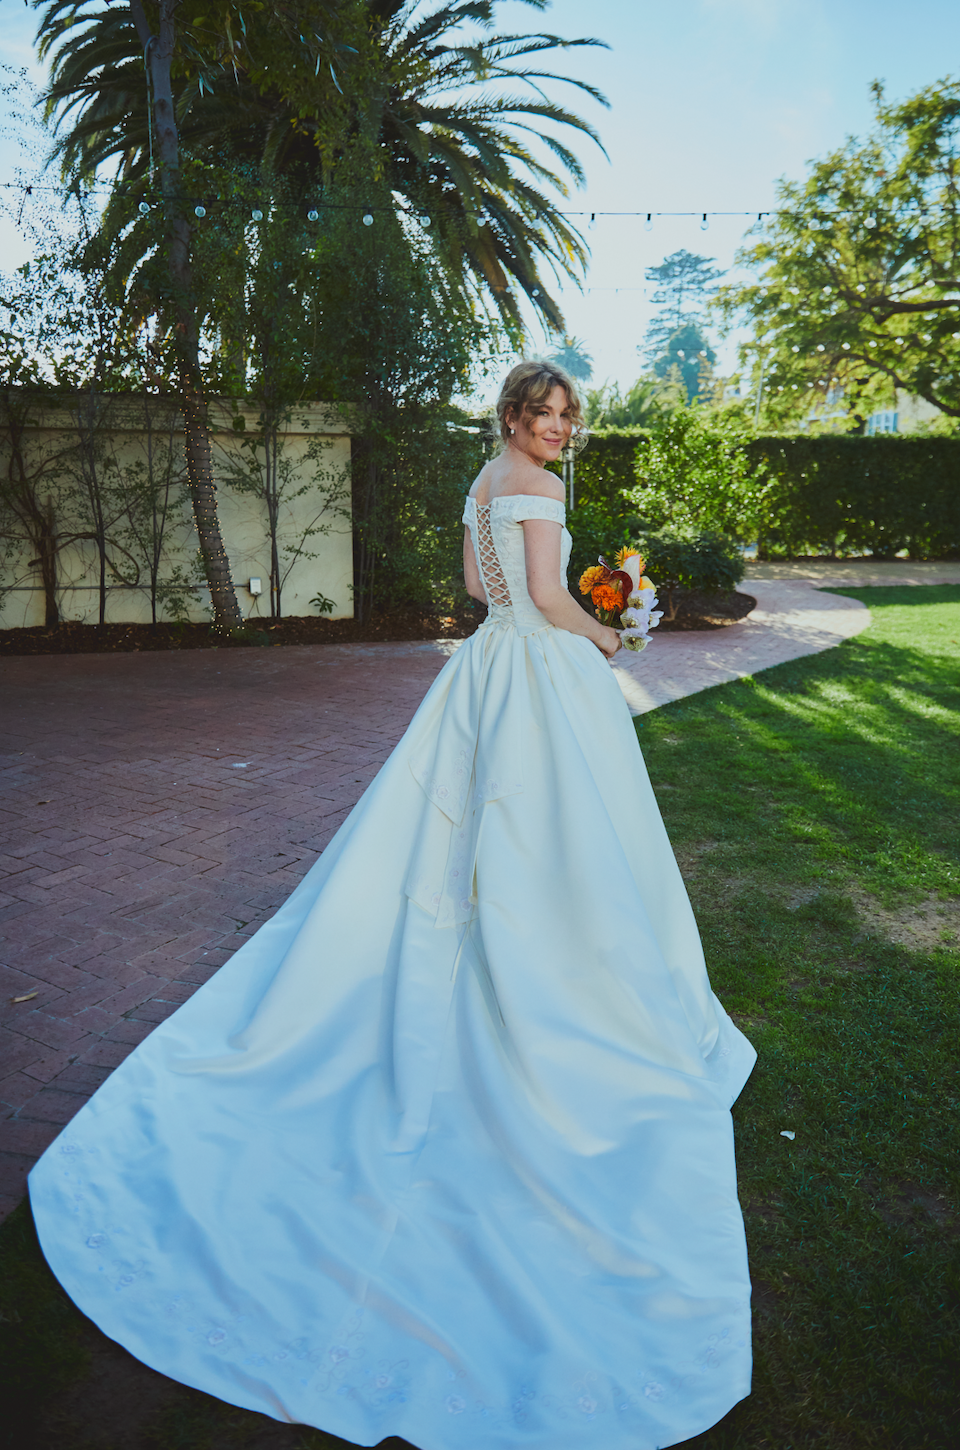 www.santabarbarawedding.com | Santa Barbara Club | Lance Skundrich | Wild Heart Events | Going Steady Studios | Shanie Crosbie Makeup | Bride In Gown Holding Bridal Bouquet